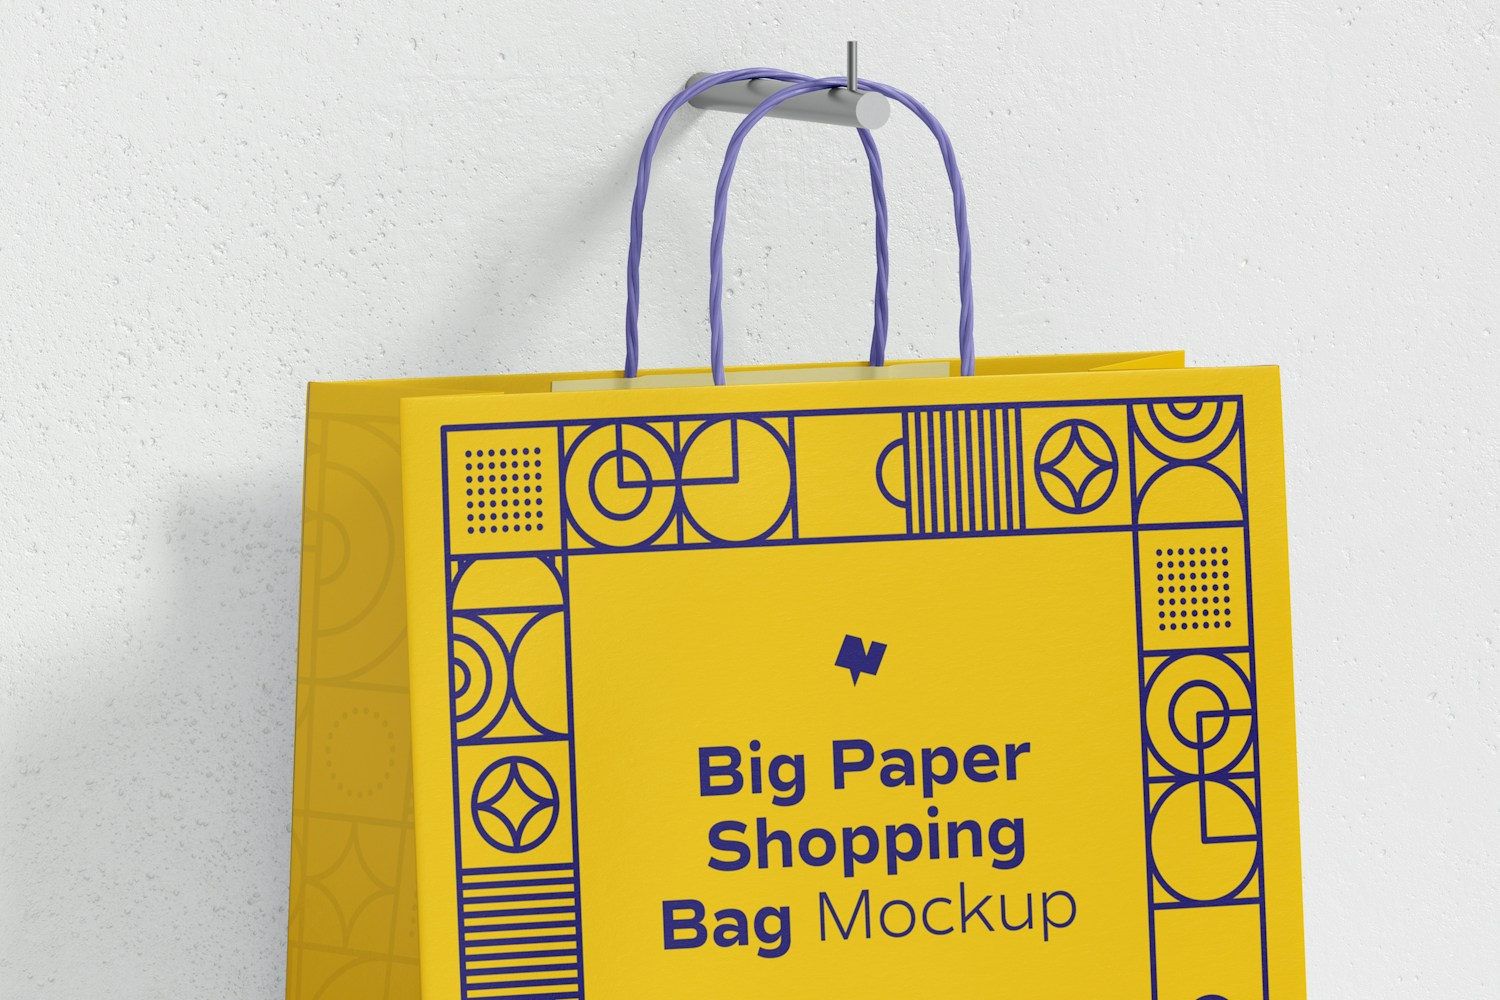 Big Paper Shopping Bags Mockup, Top View